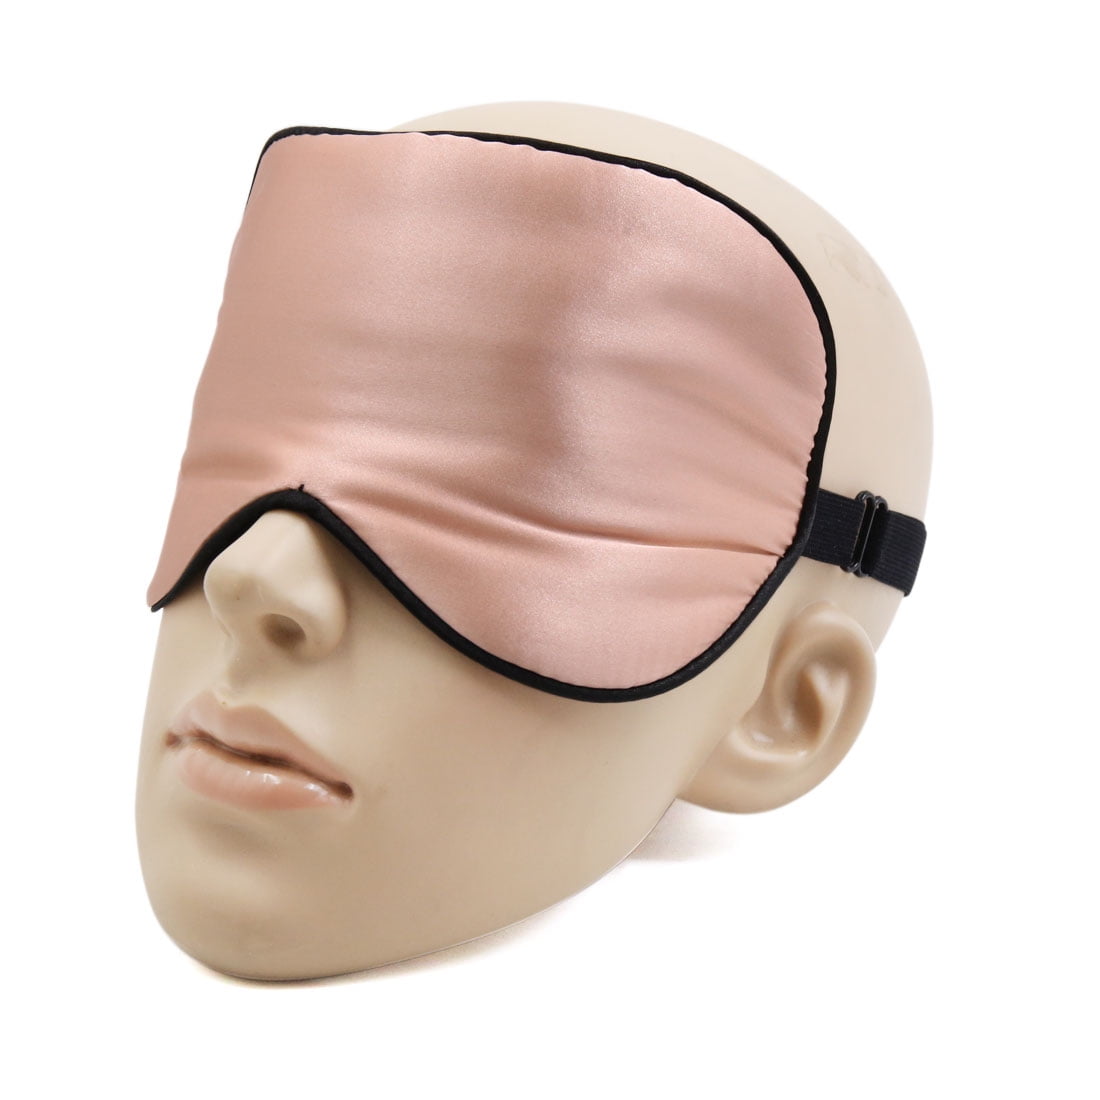 Scroll down to read item details Blind fold Elastic ribbon Sleepwear ELVIS reversible eye mask Travel shade